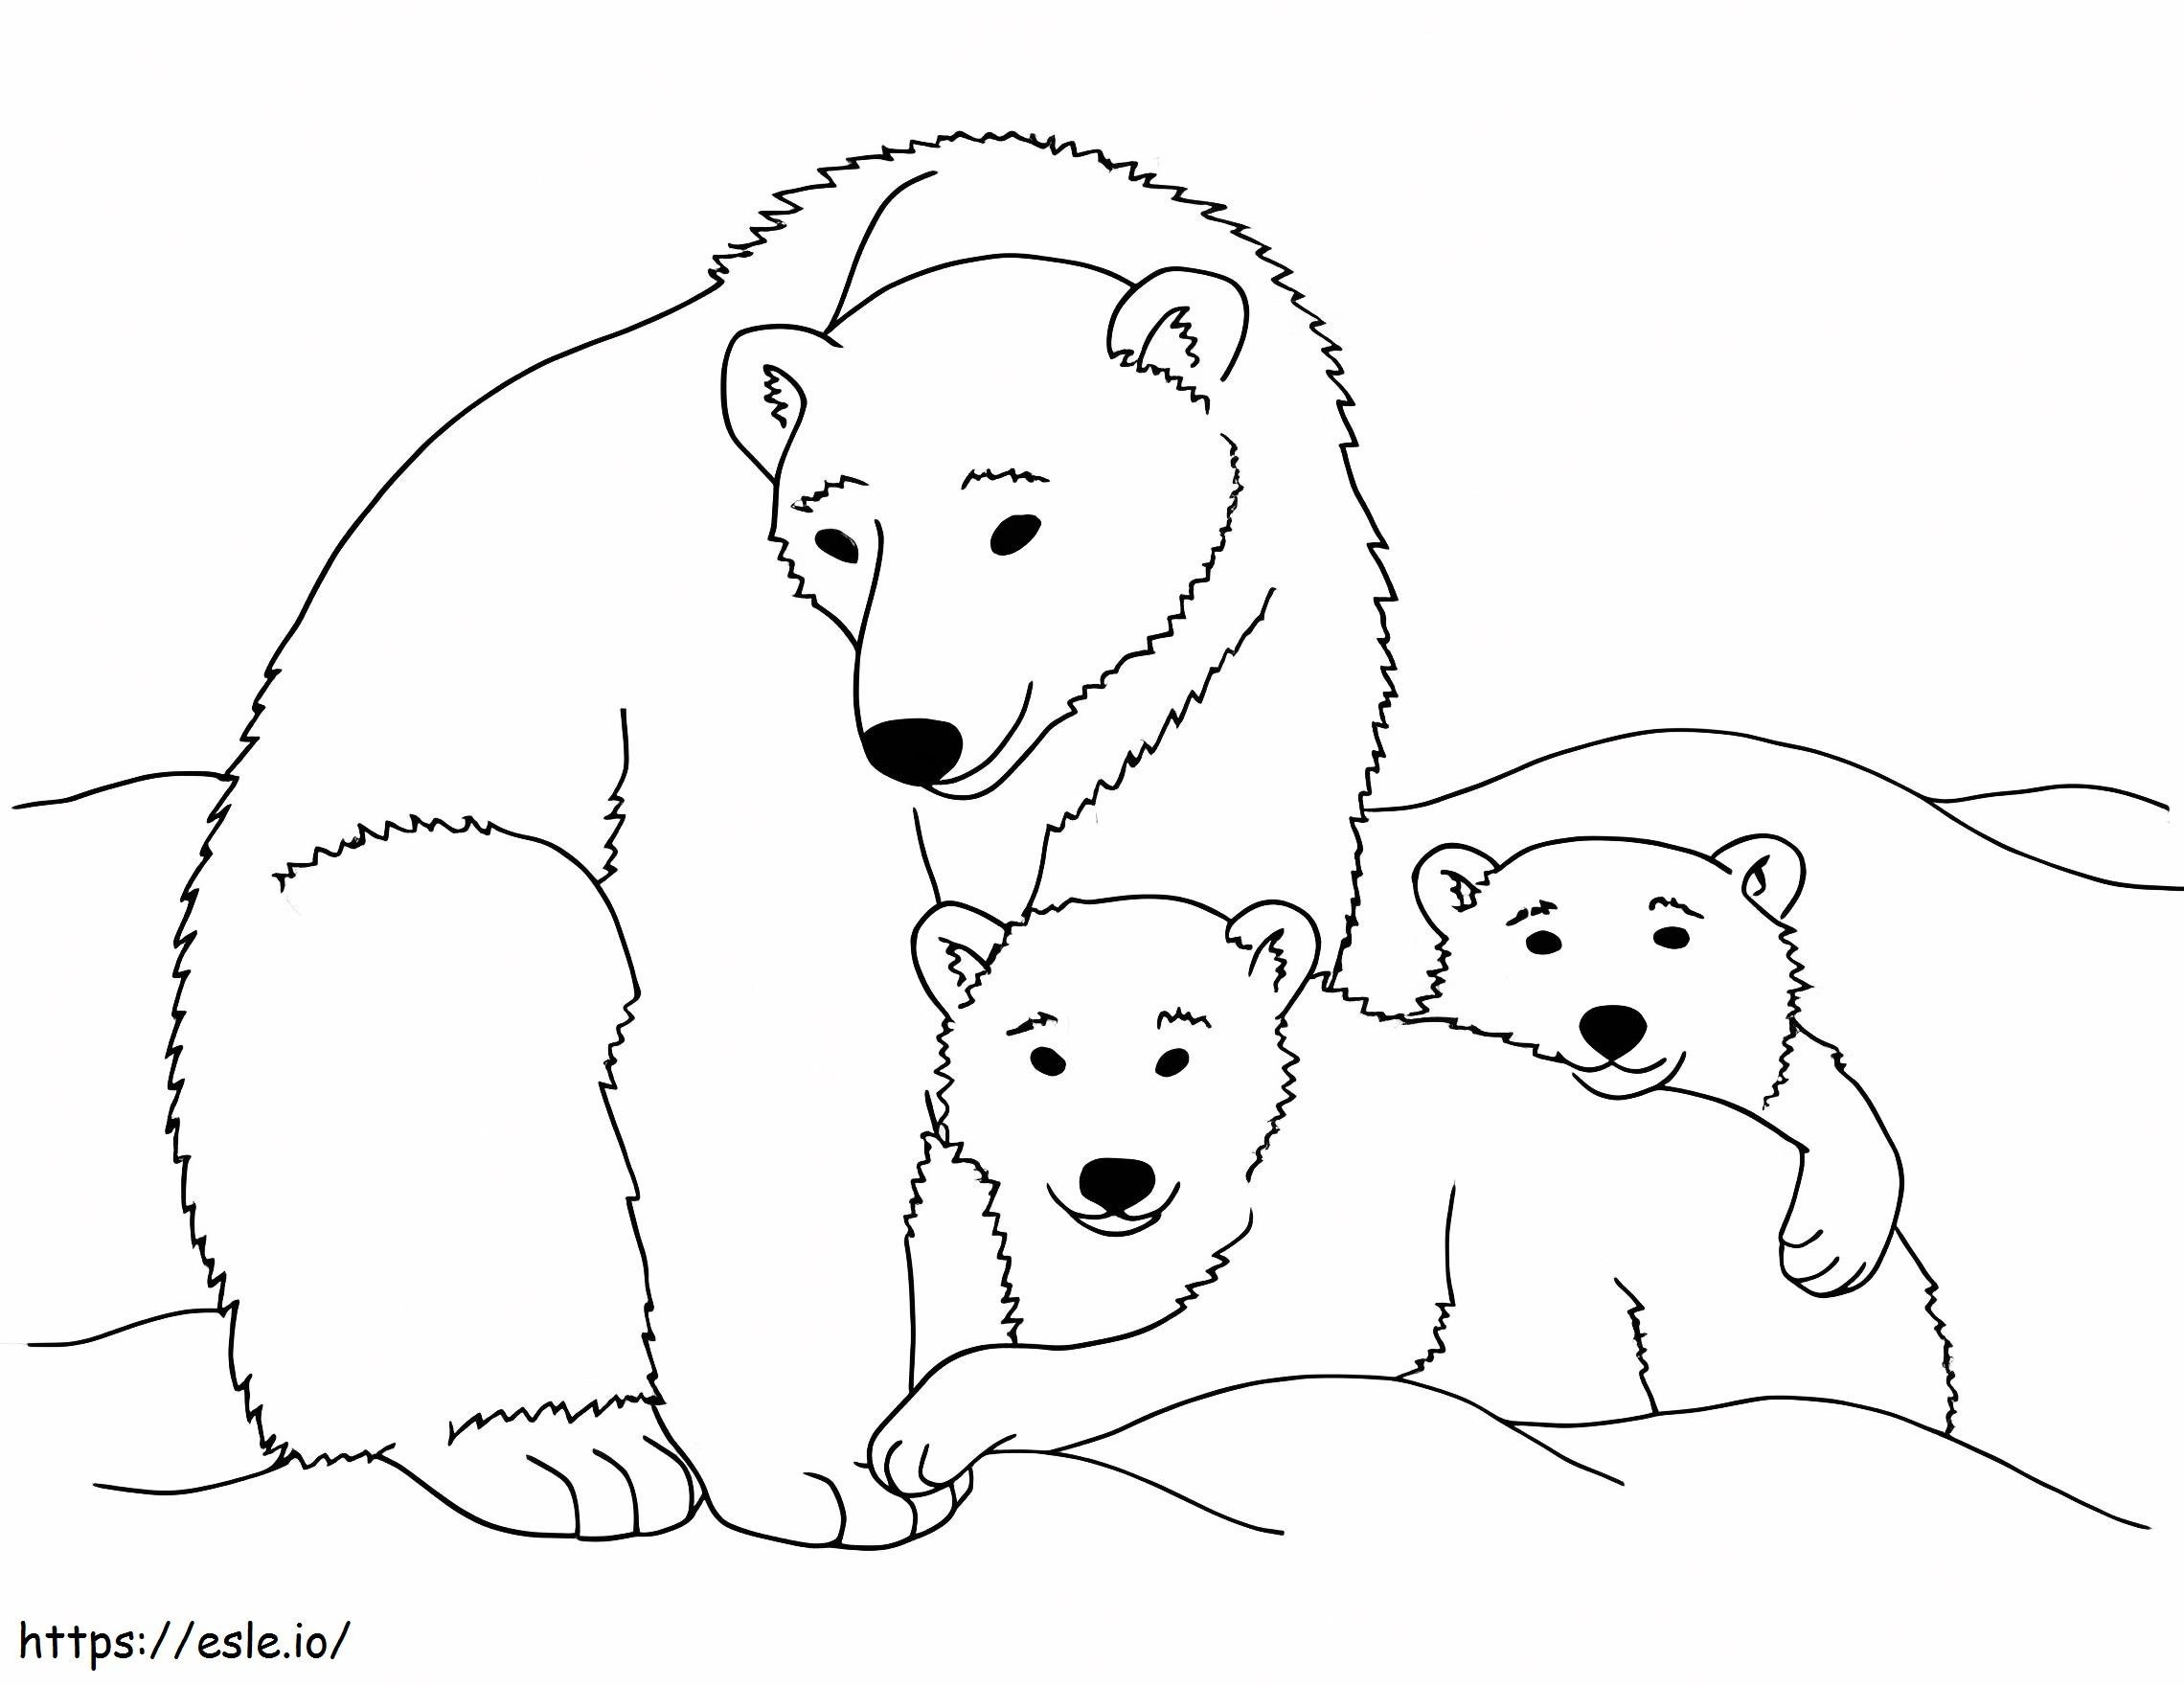 Familia de osos de hielo sonriente para colorear